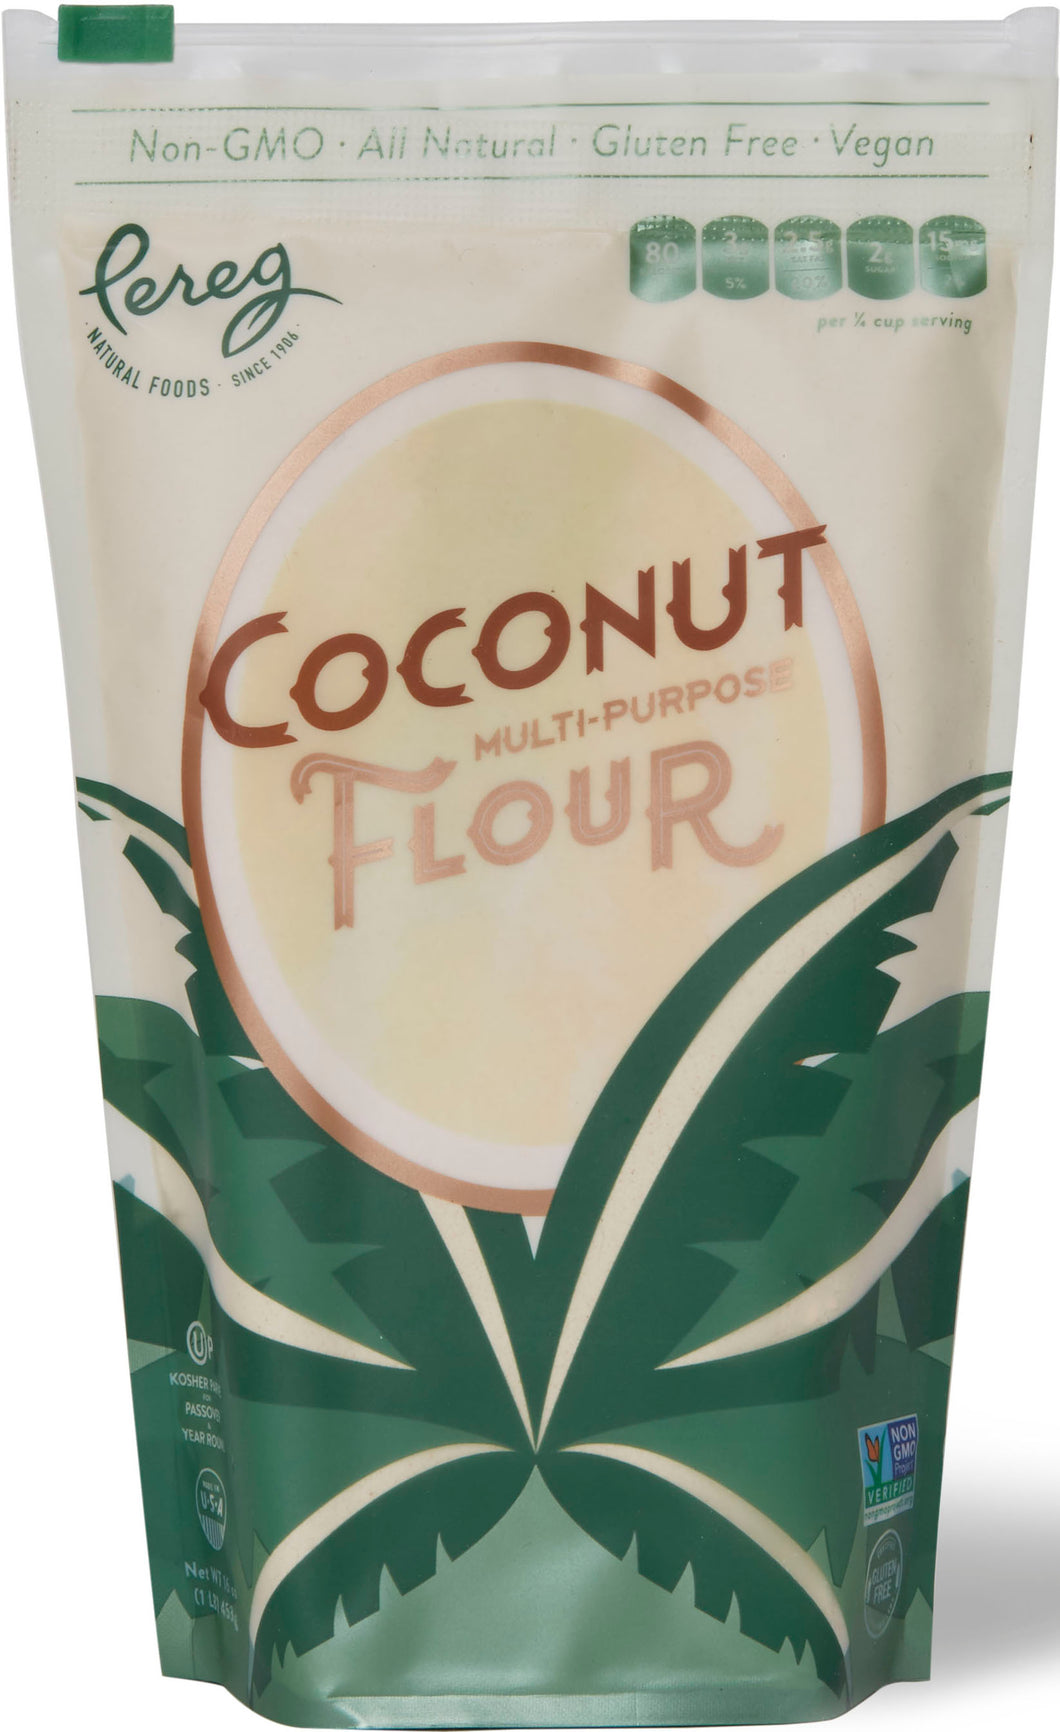 Pereg Coconut Flour, 16 oz